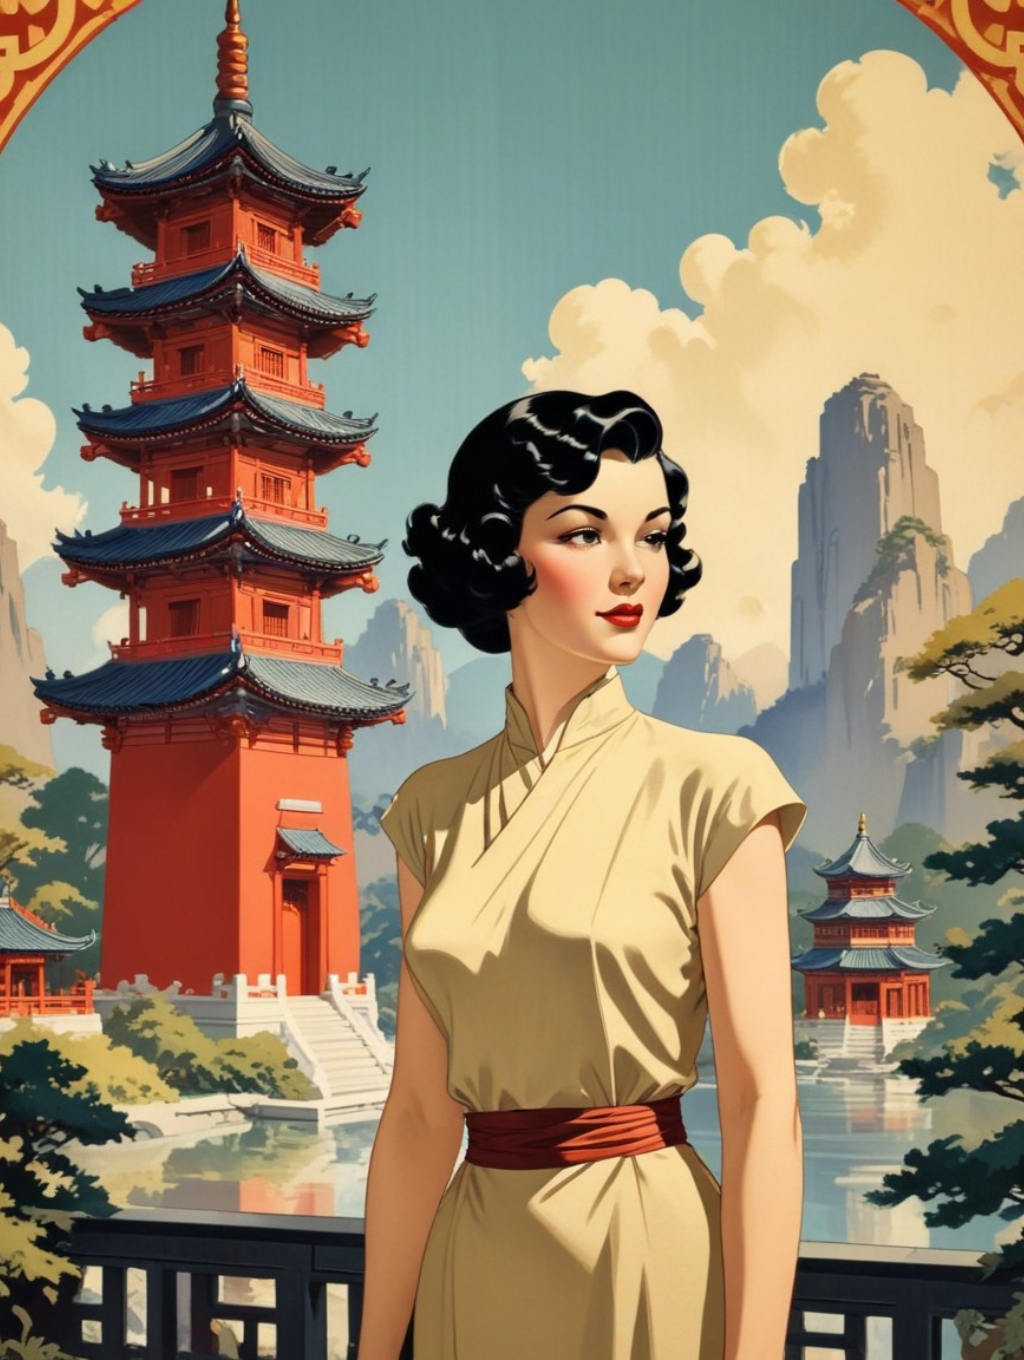 Art Deco Travel Posters Women: Image Frames & Self-Portraits-Theme:3